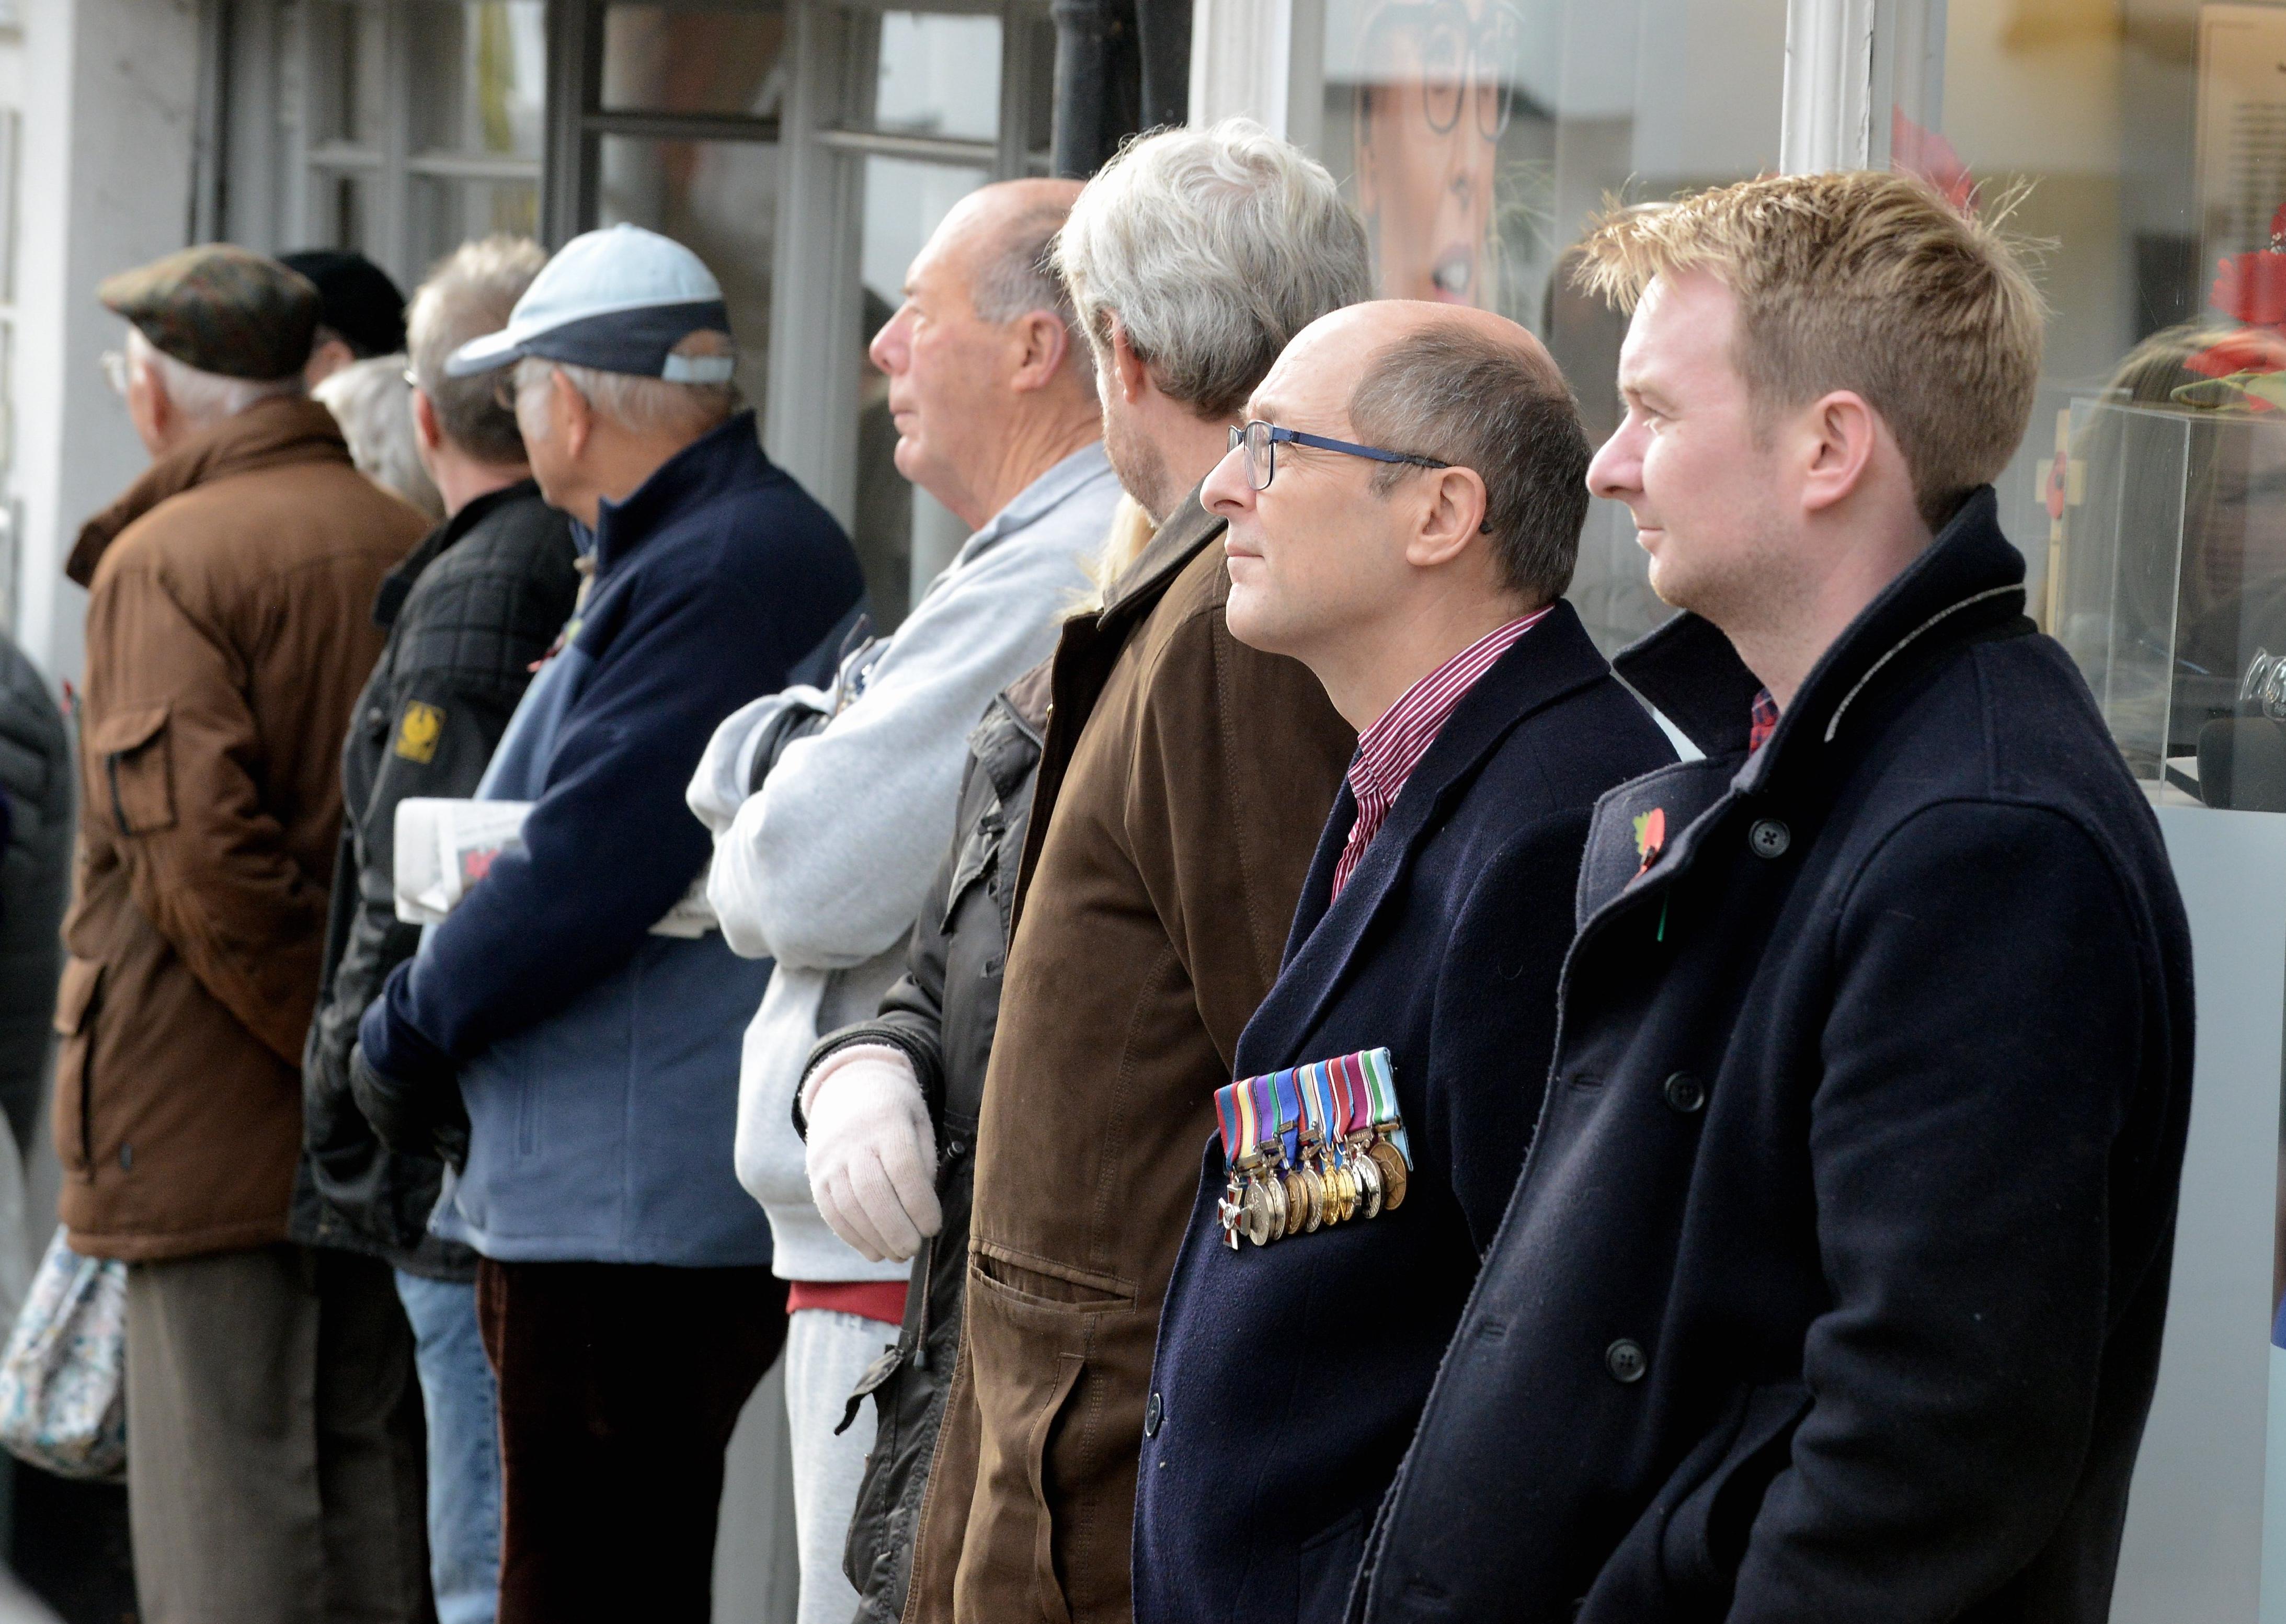 ks190613-4 Midhurst Remembrance (Mon)  phot kate
Midhurst residents gather at the memorial.ks190613-4 SUS-191111-184808008